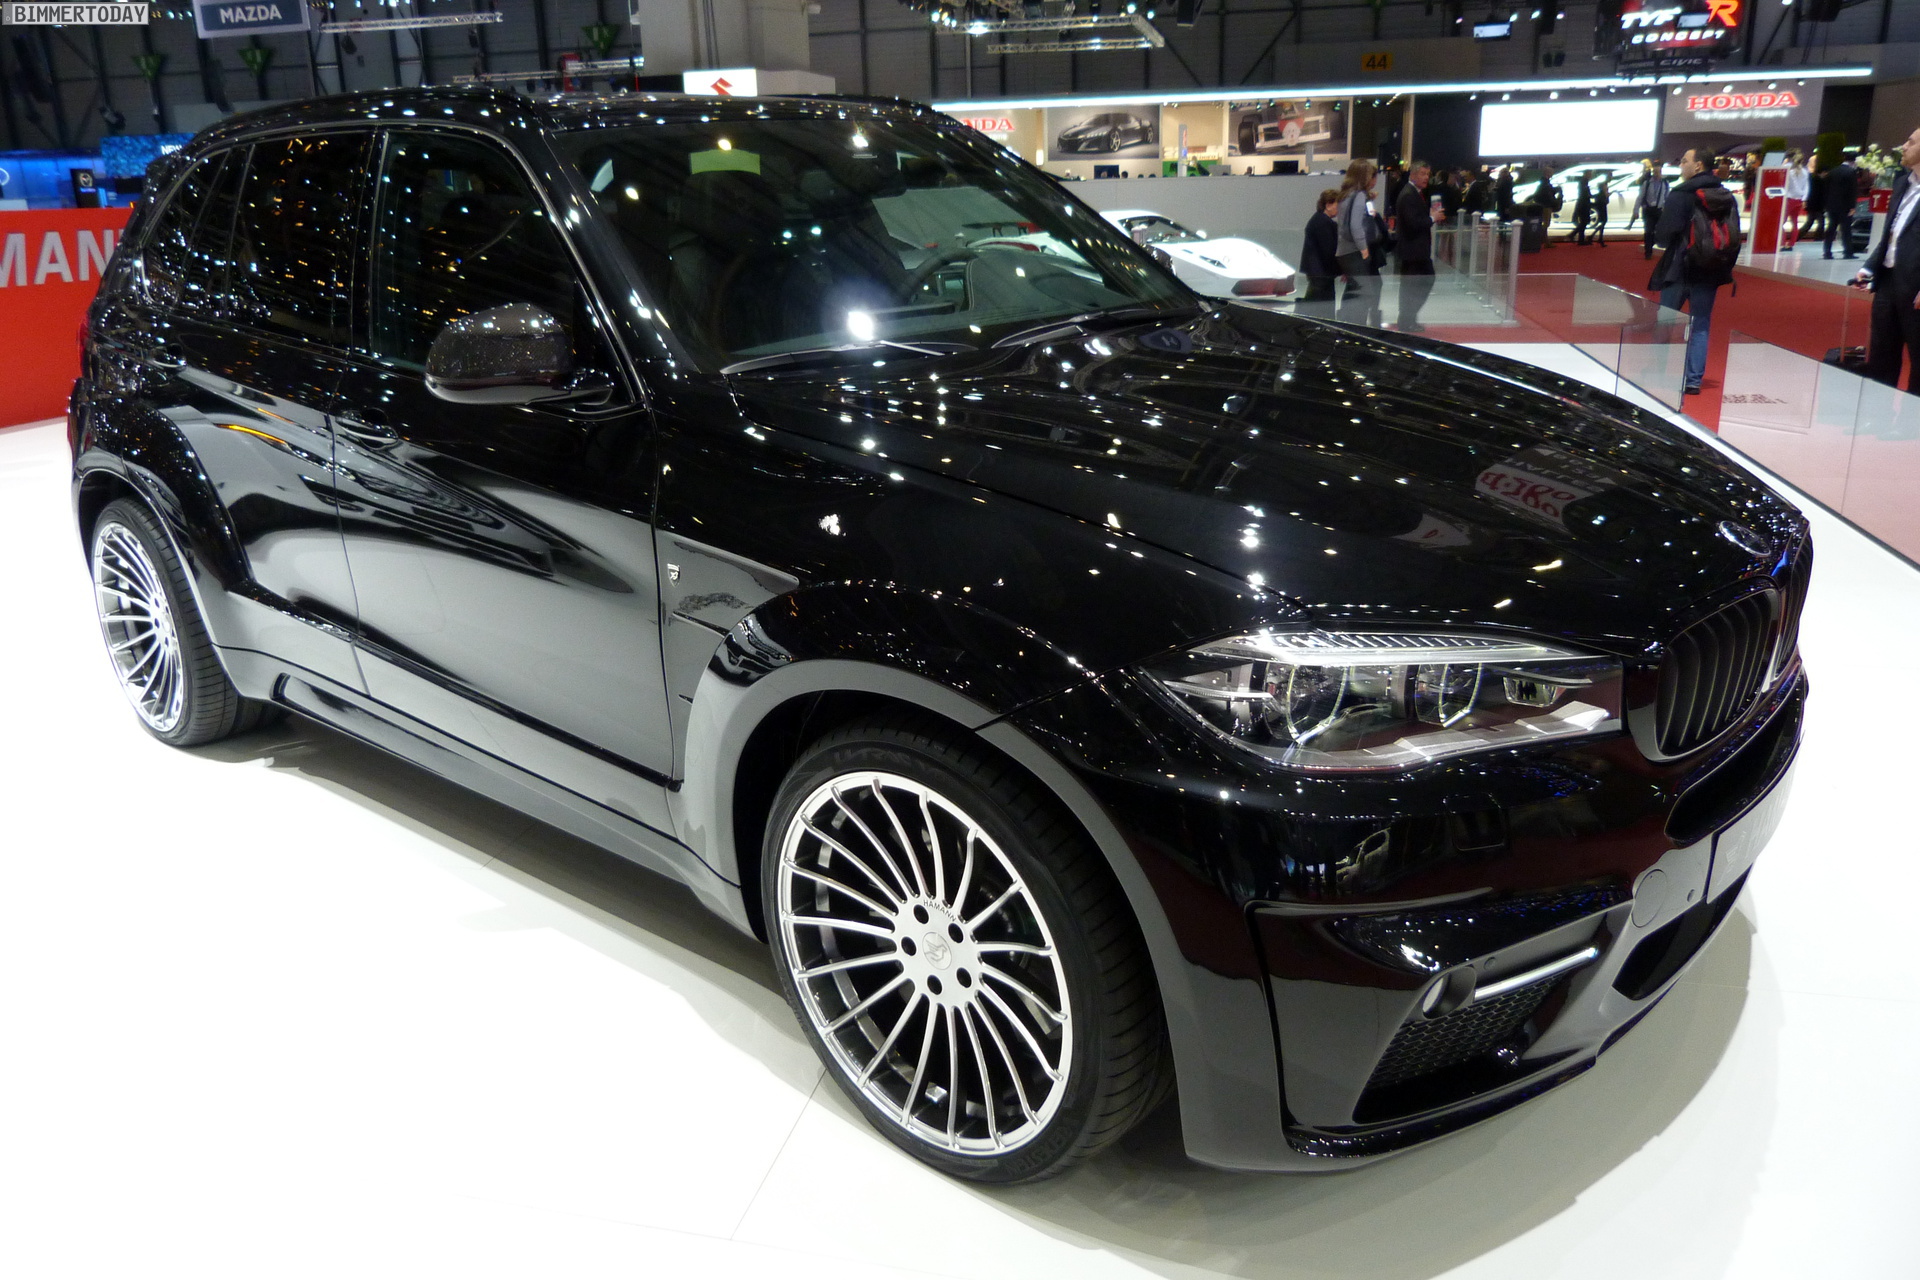 Genfer Salon 2014: Hamann BMW X5 F15 mit breitem Tuning-Bodykit